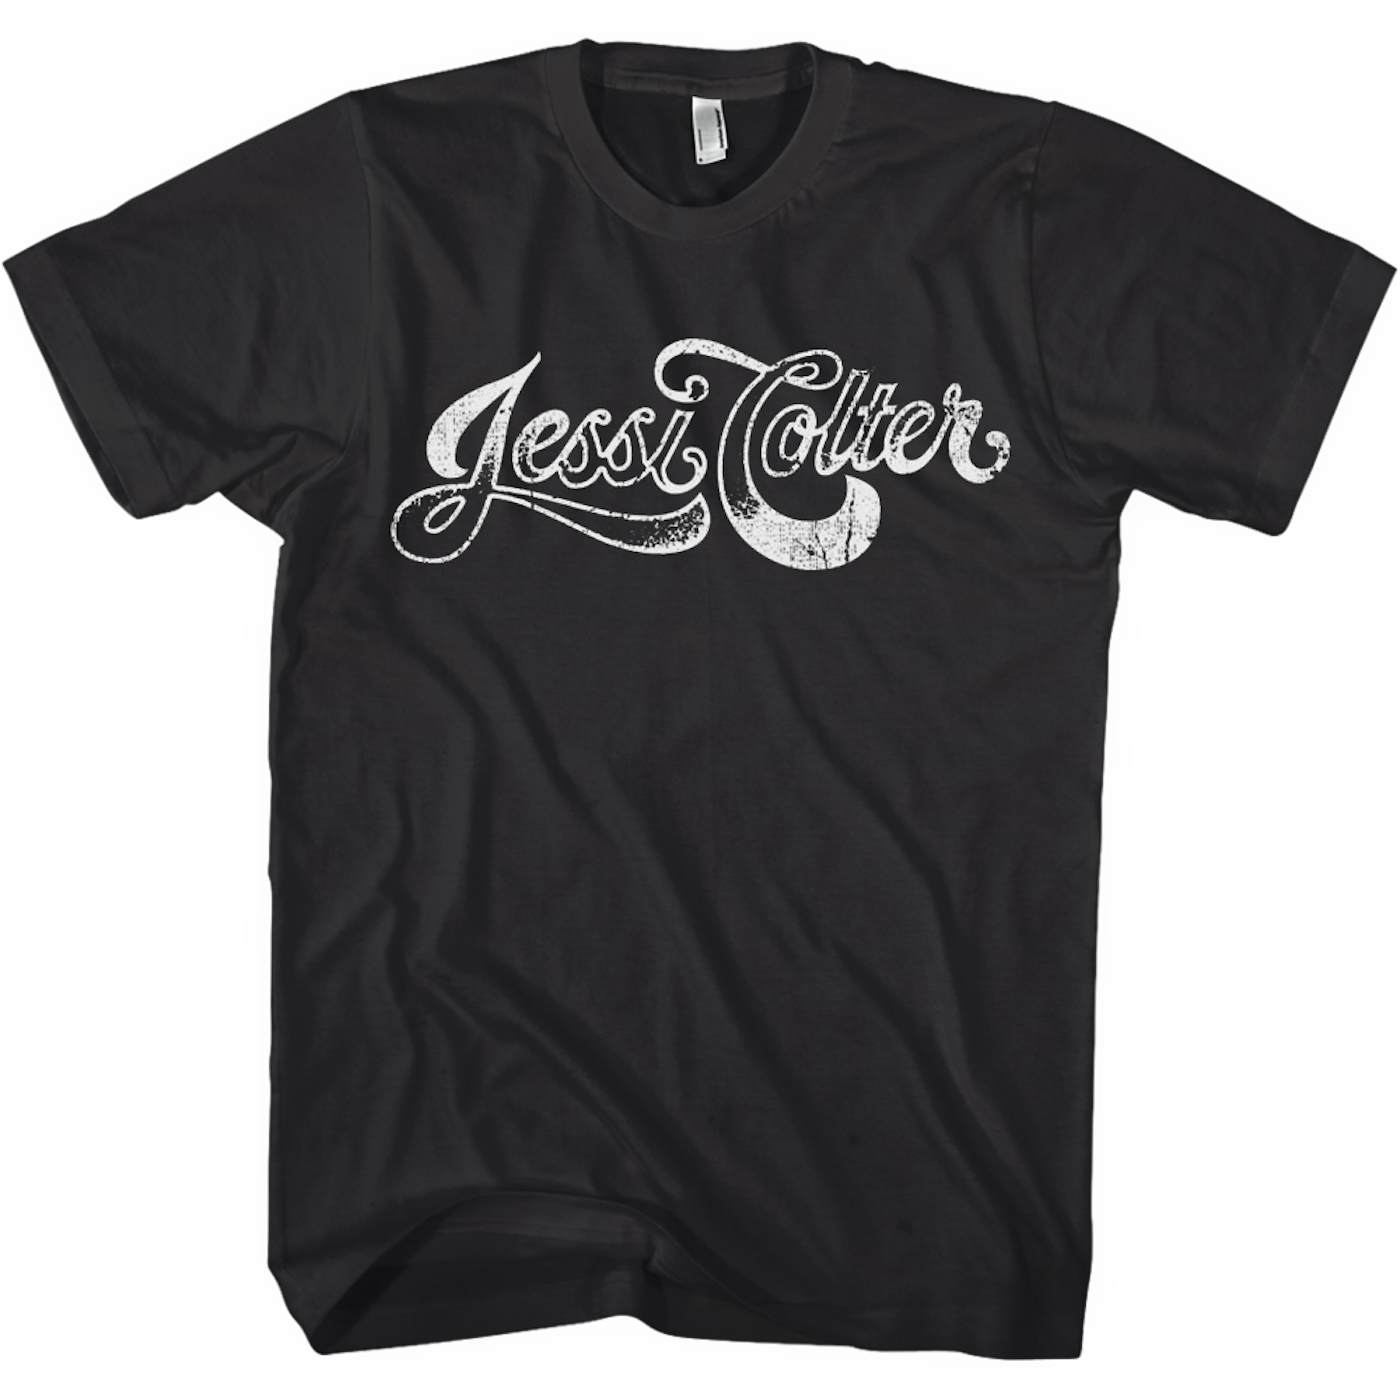 Jessi Colter - T-Shirt